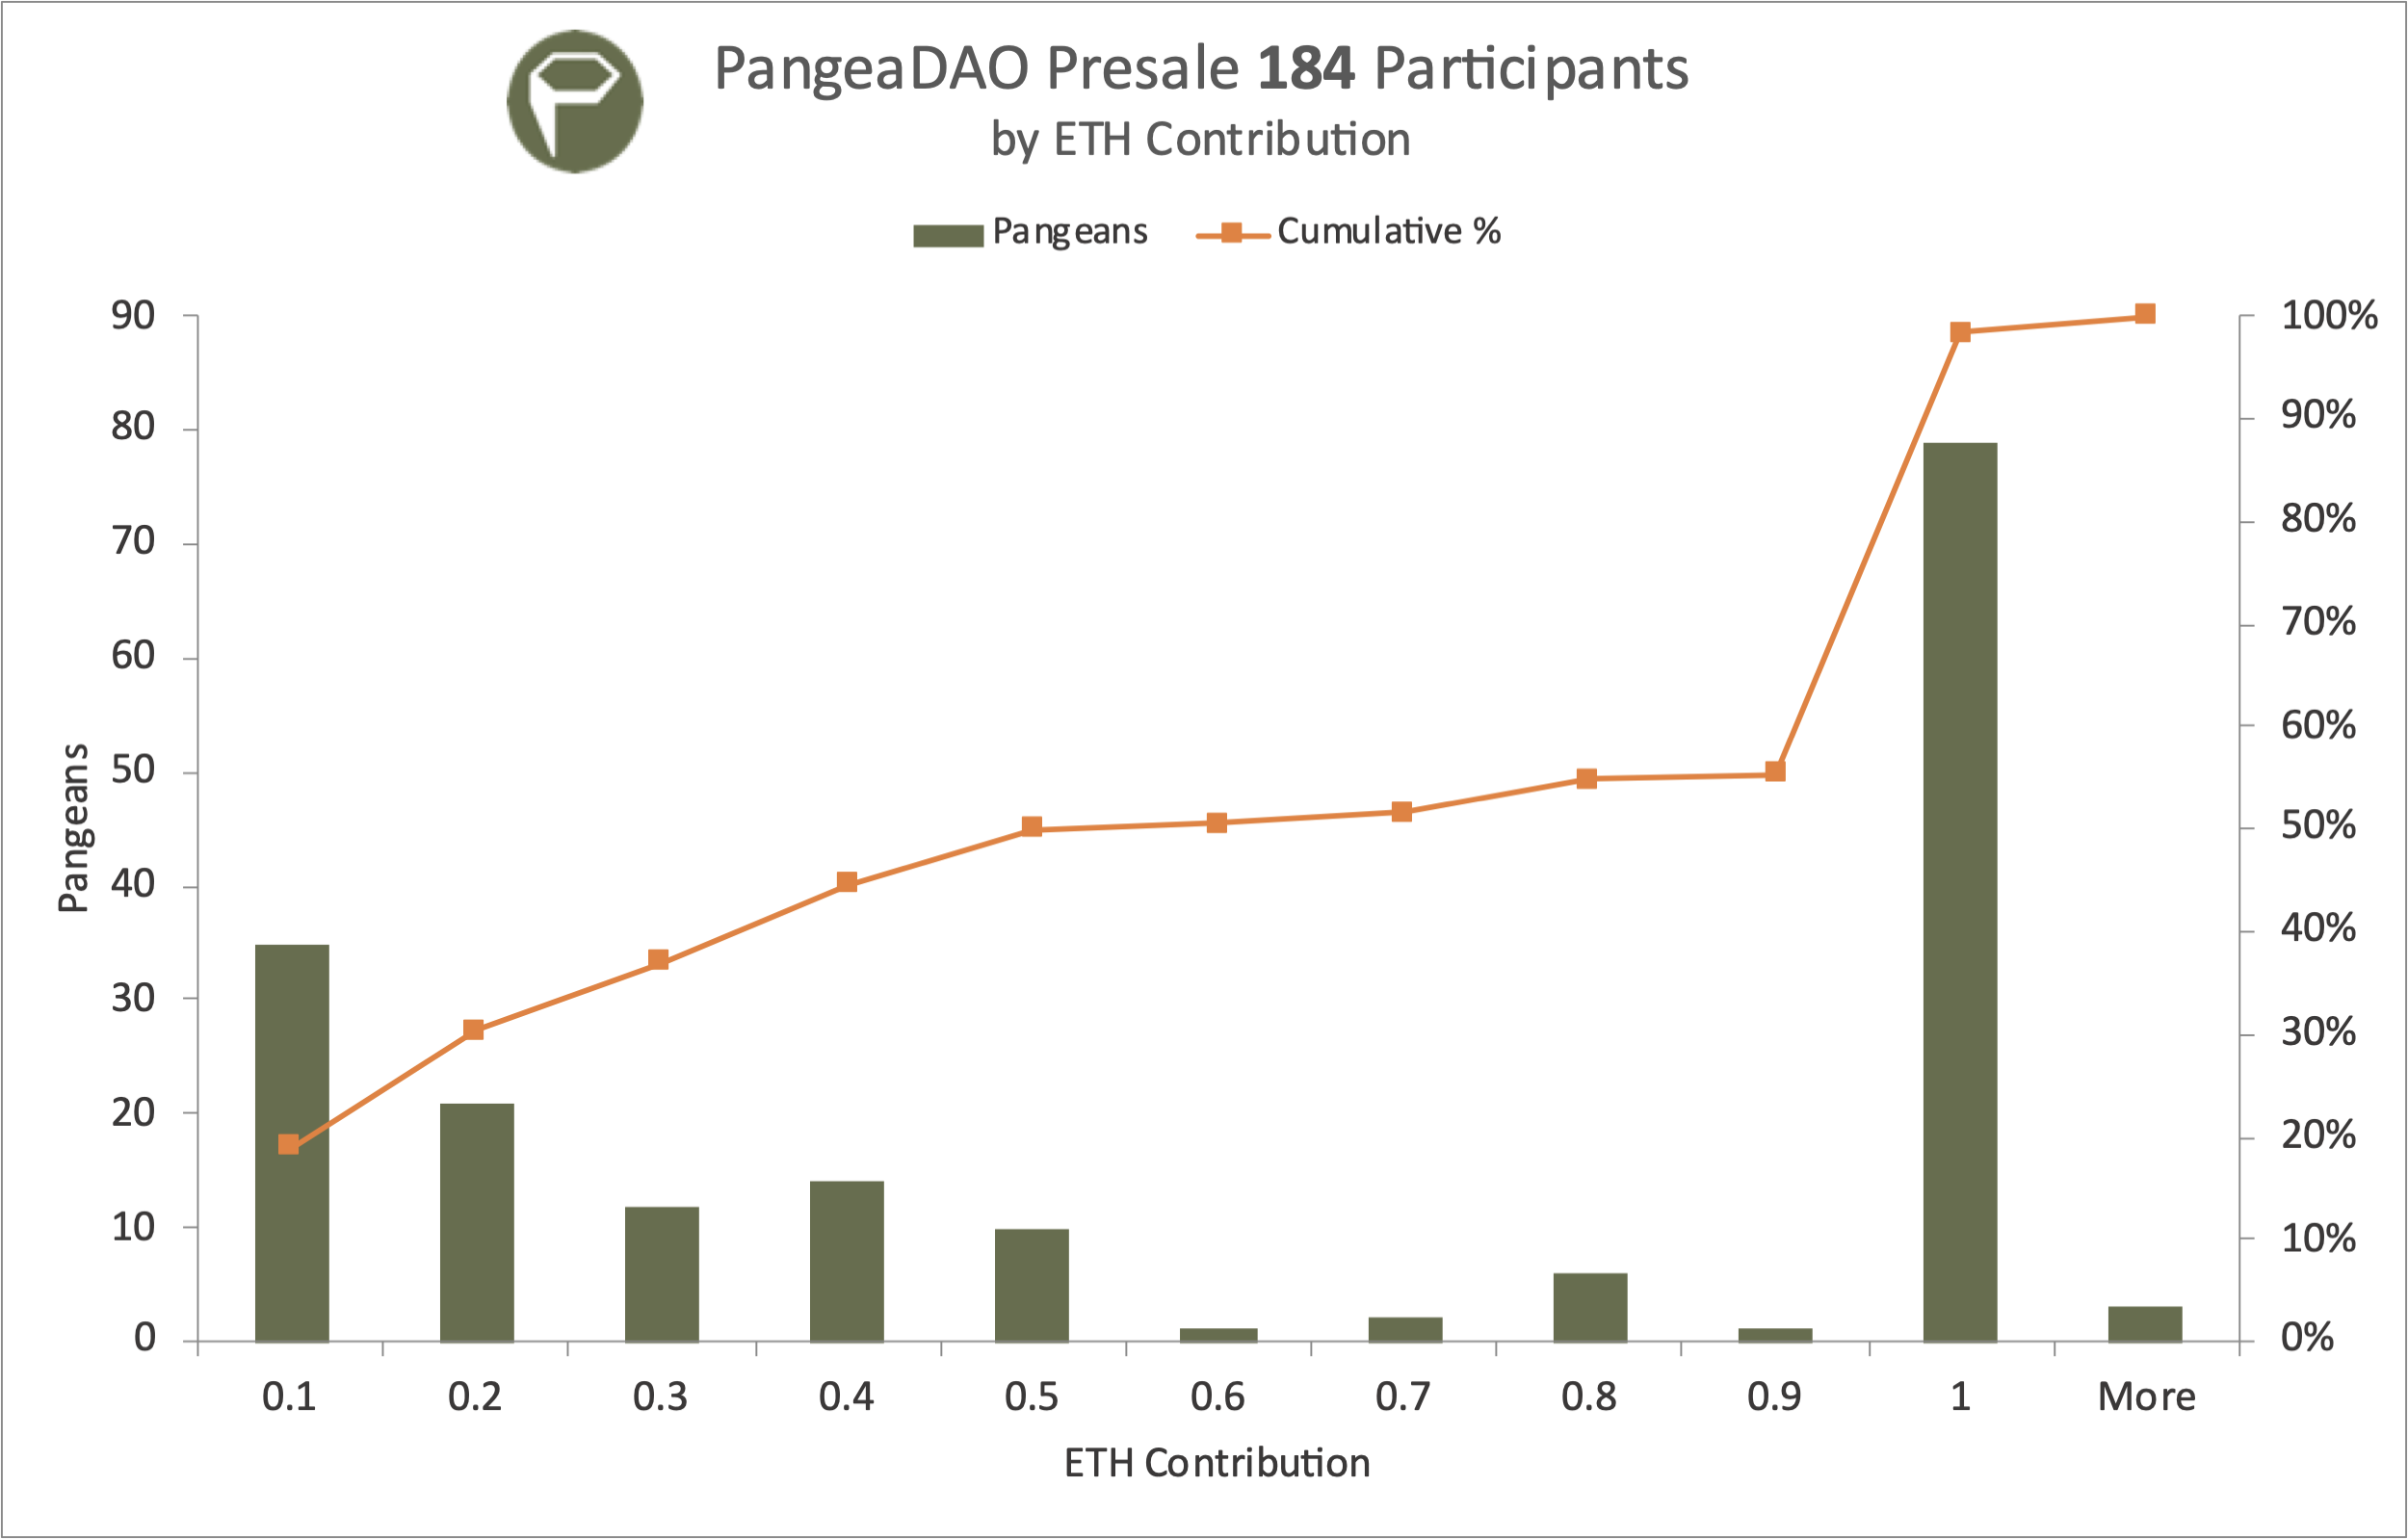 PangeaDAO Presale Participants by Contribution